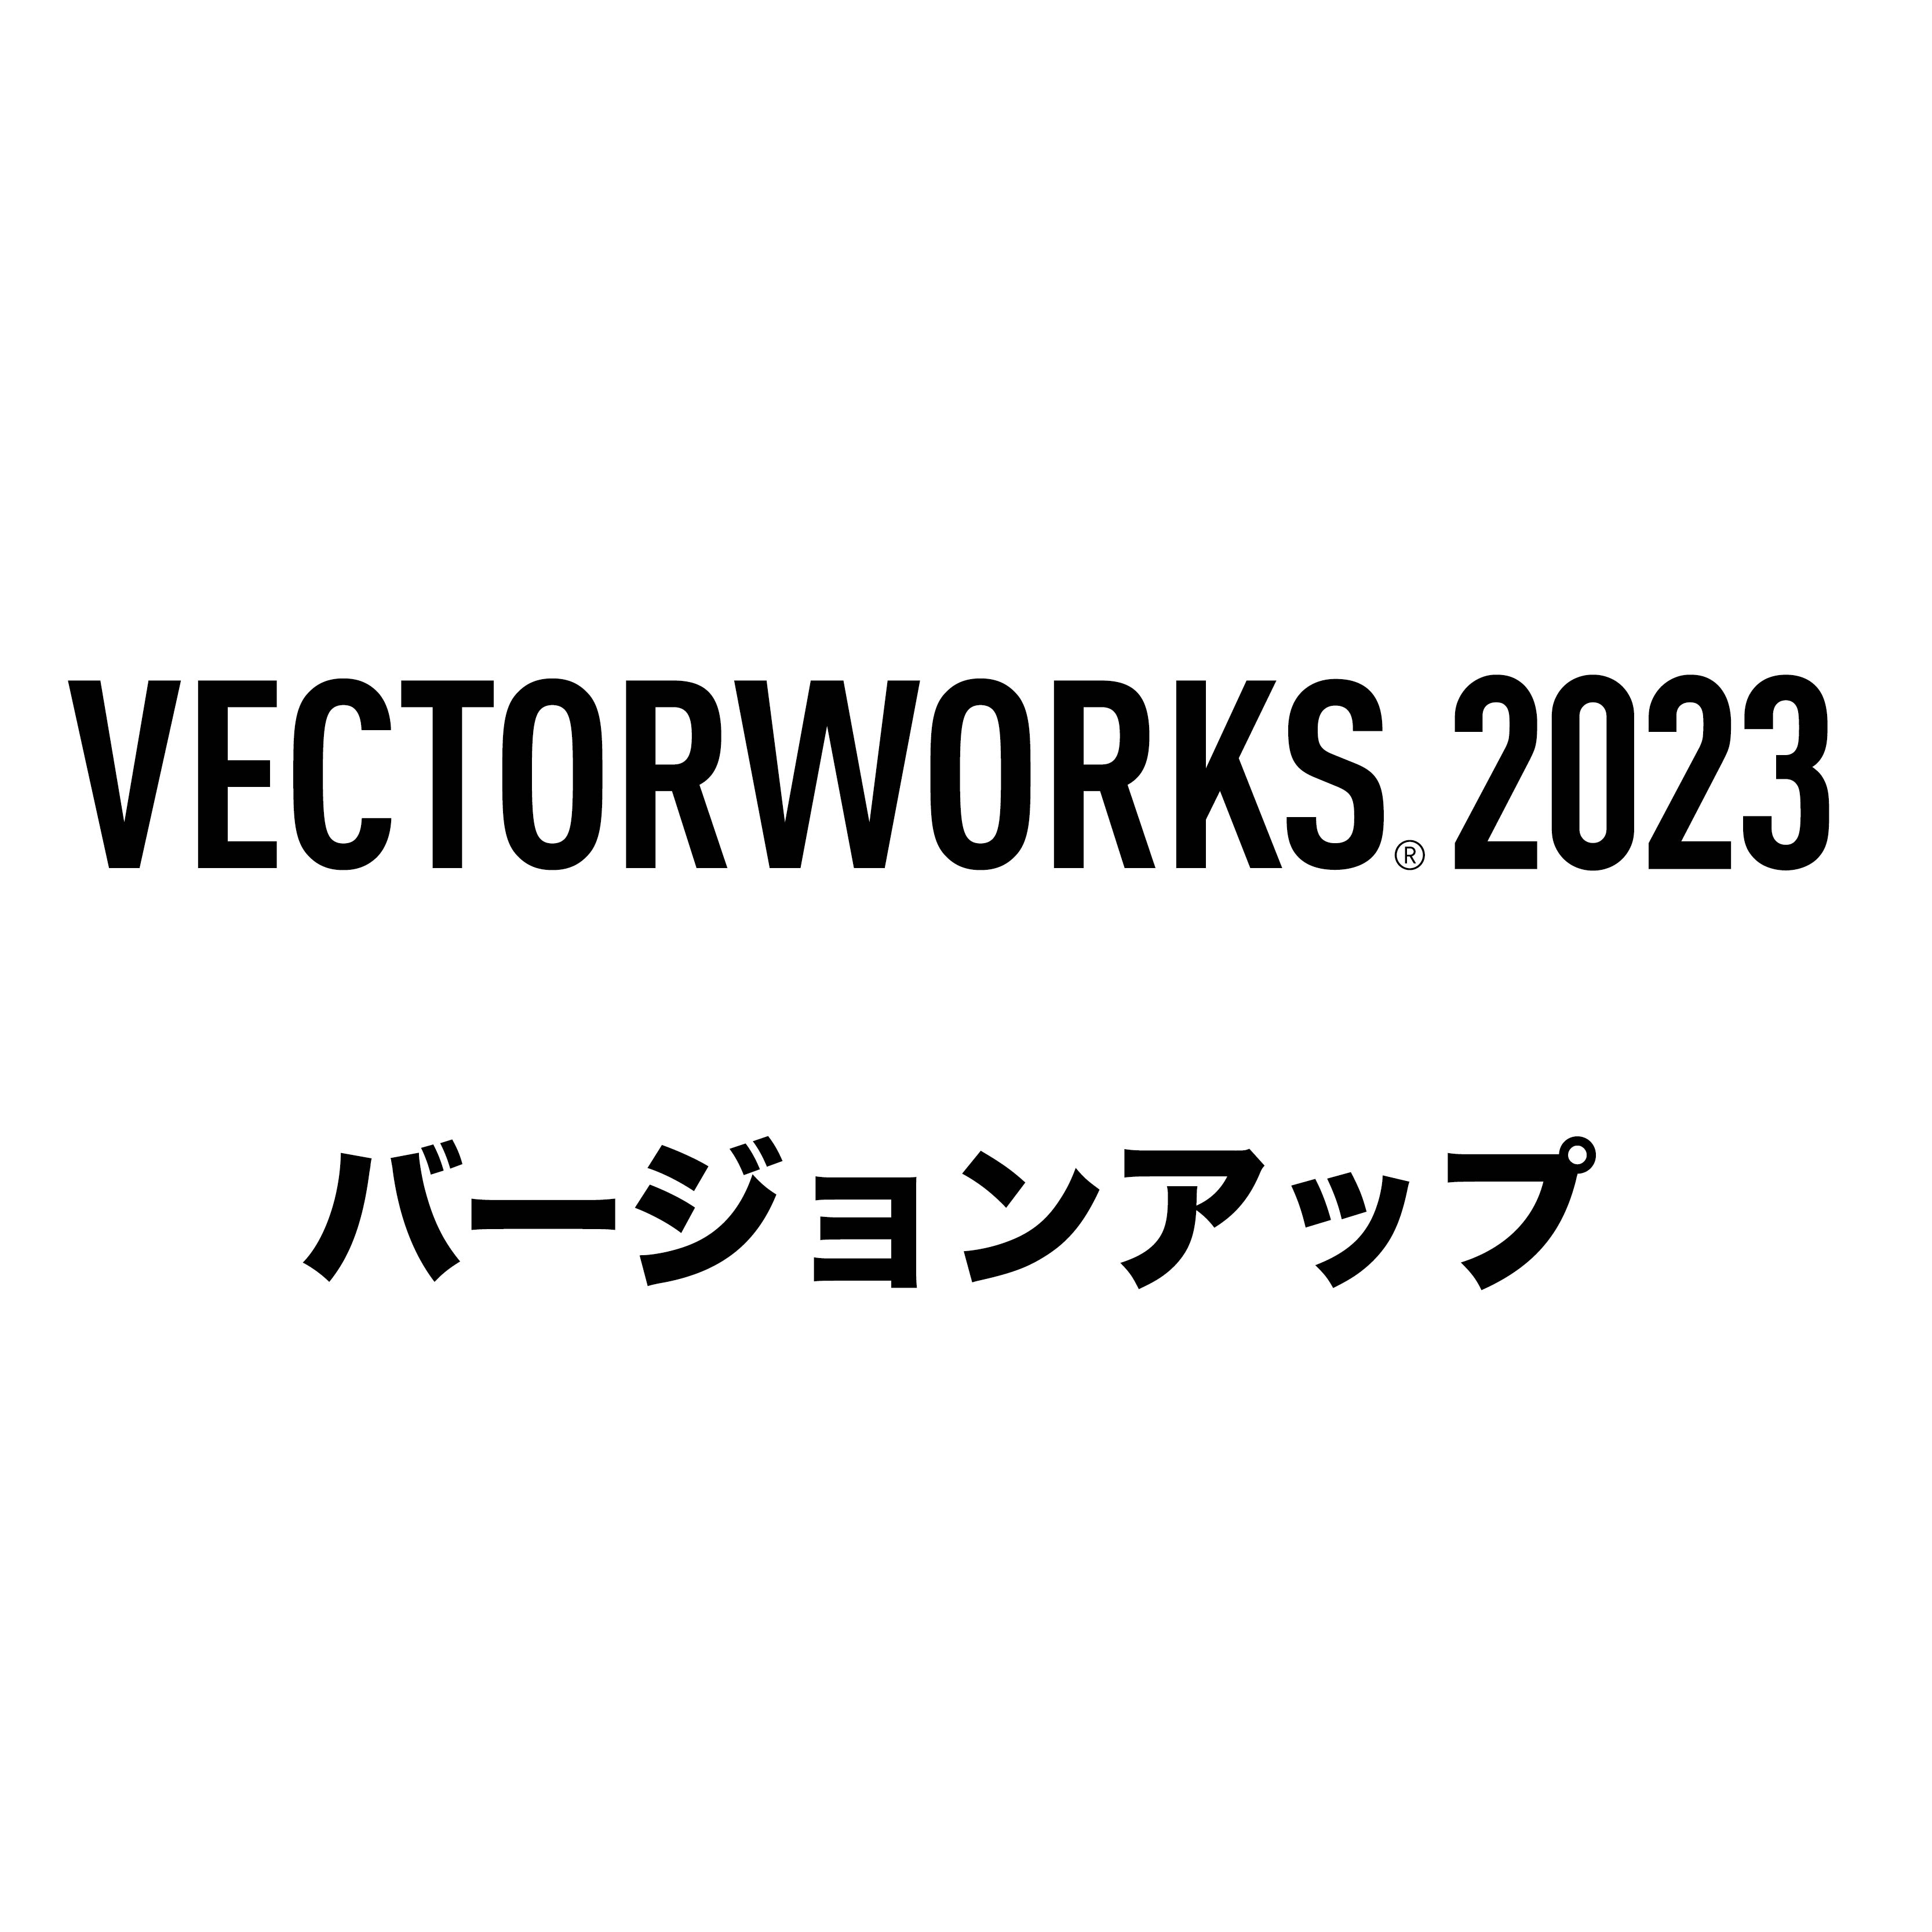 A&Aストア・オンライン | Vectorworks バージョンアップ